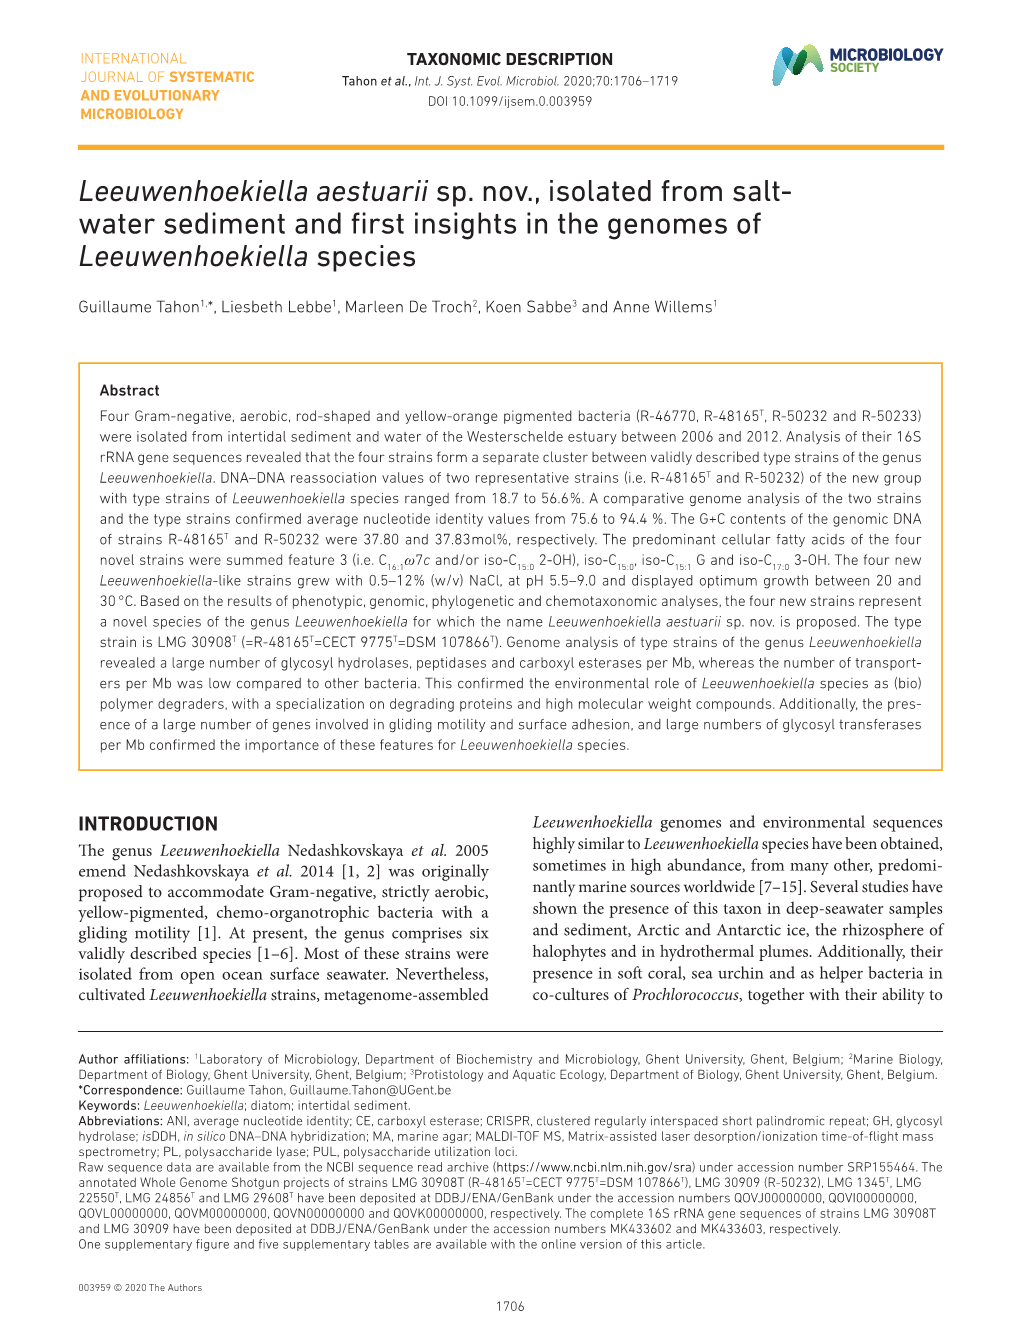 Leeuwenhoekiella Aestuarii Sp. Nov., Isolated from Salt- Water Sediment and First Insights in the Genomes of Leeuwenhoekiella S